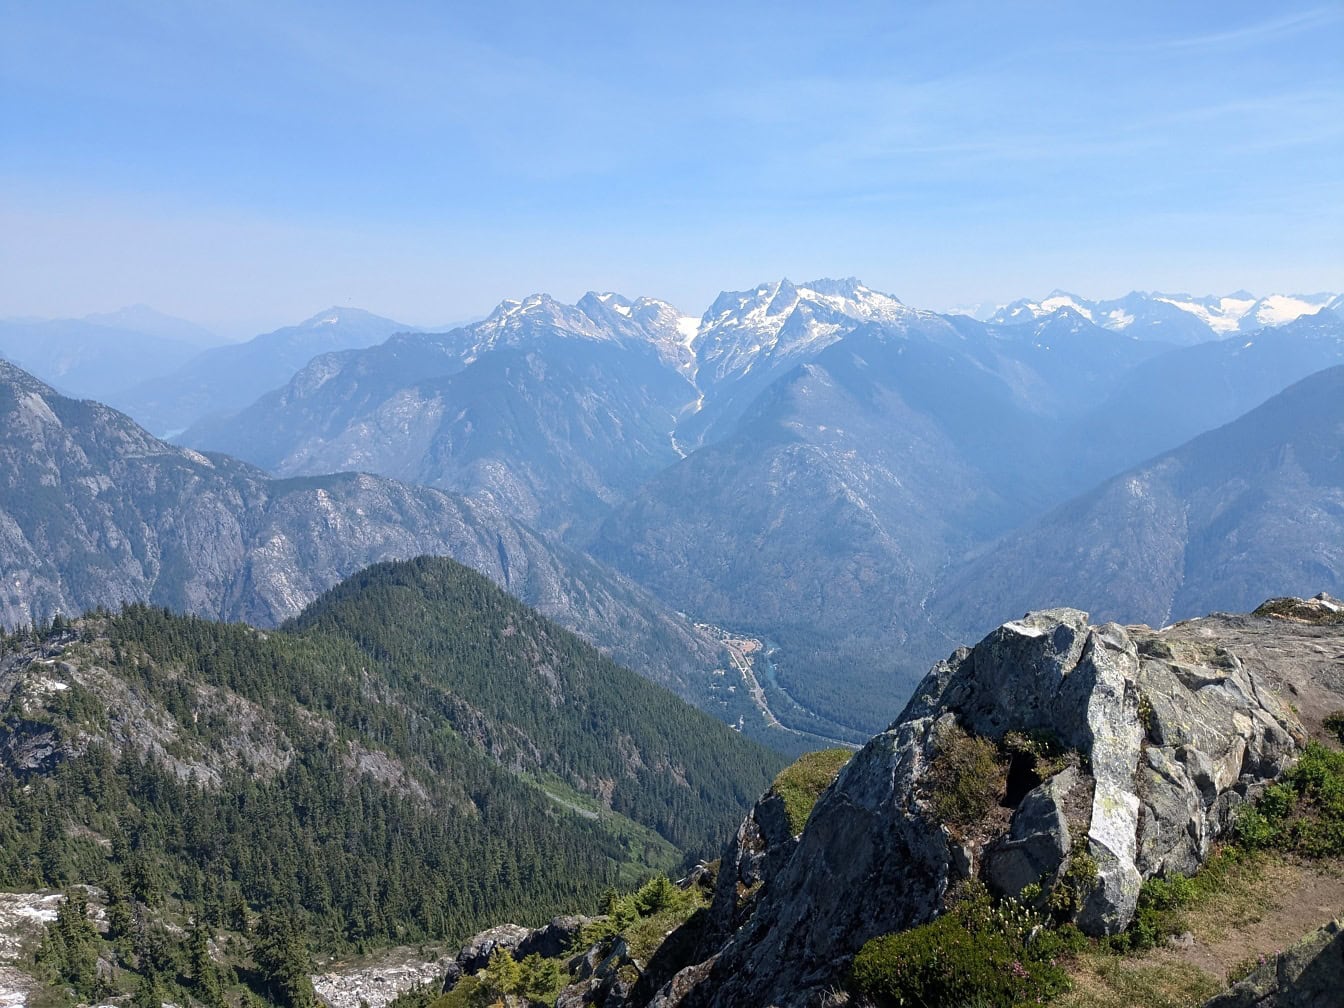 Lembah di pegunungan dengan pegunungan yang tertutup salju di Taman Nasional Cascades Utara di negara bagian Washington AS